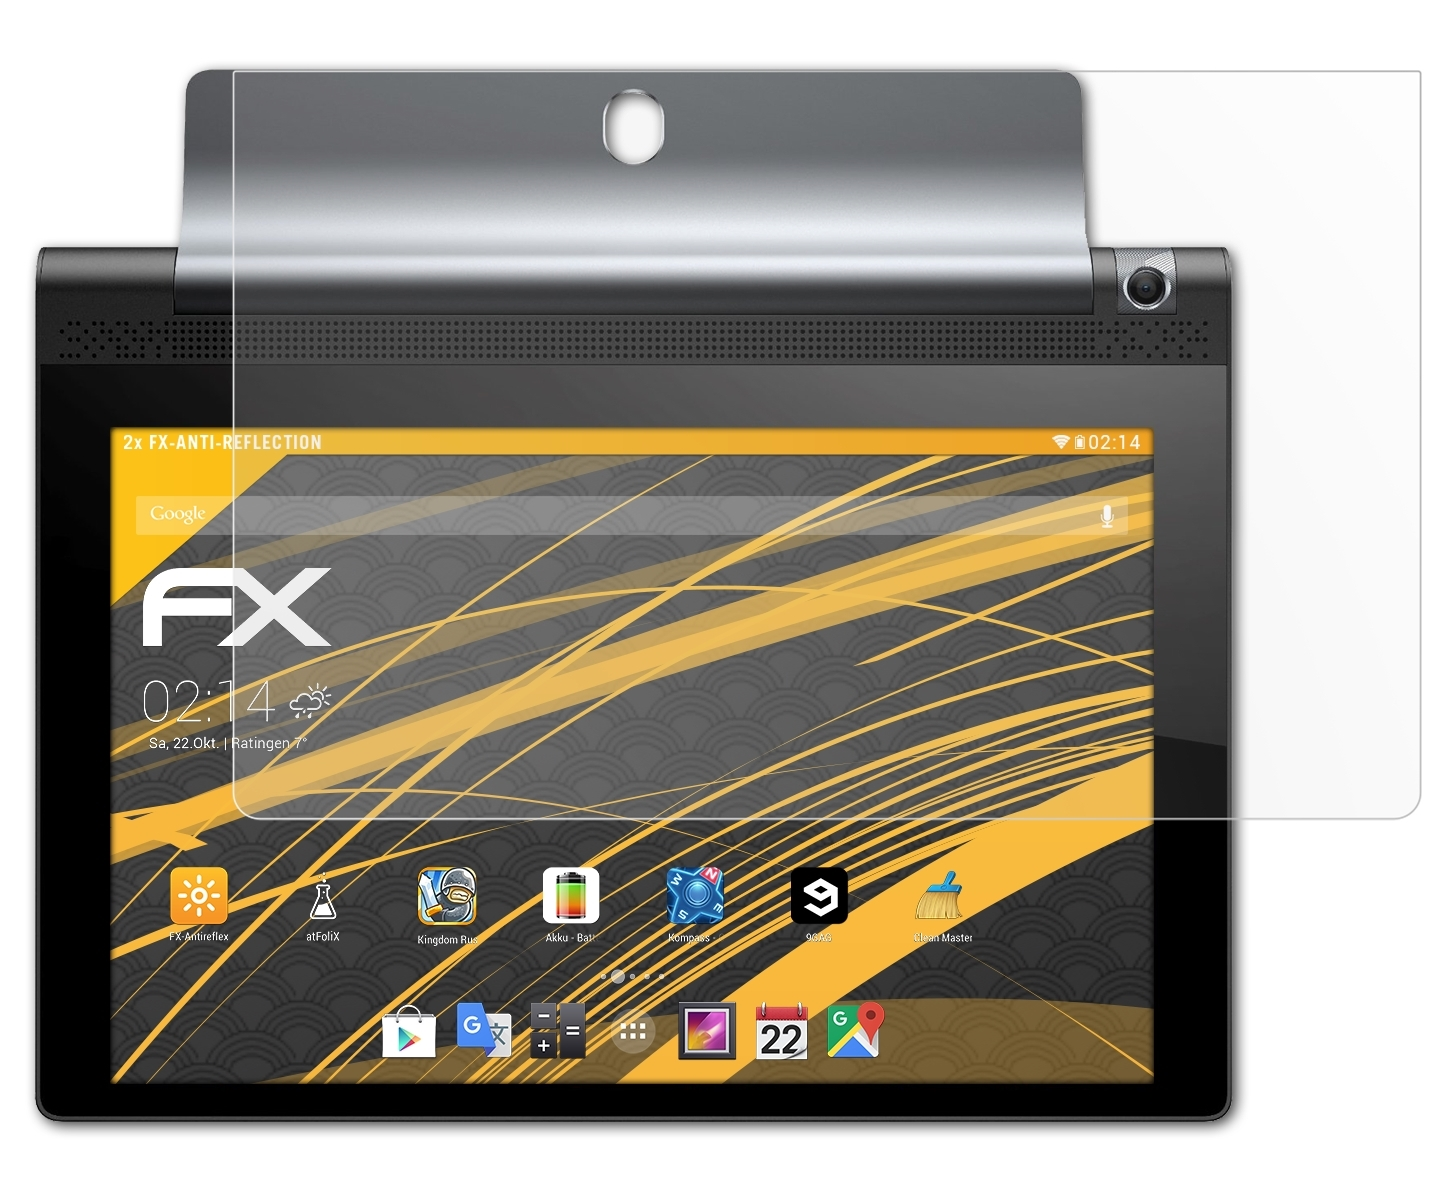 ATFOLIX 2x 10) 3 Displayschutz(für Yoga Lenovo FX-Antireflex Tab